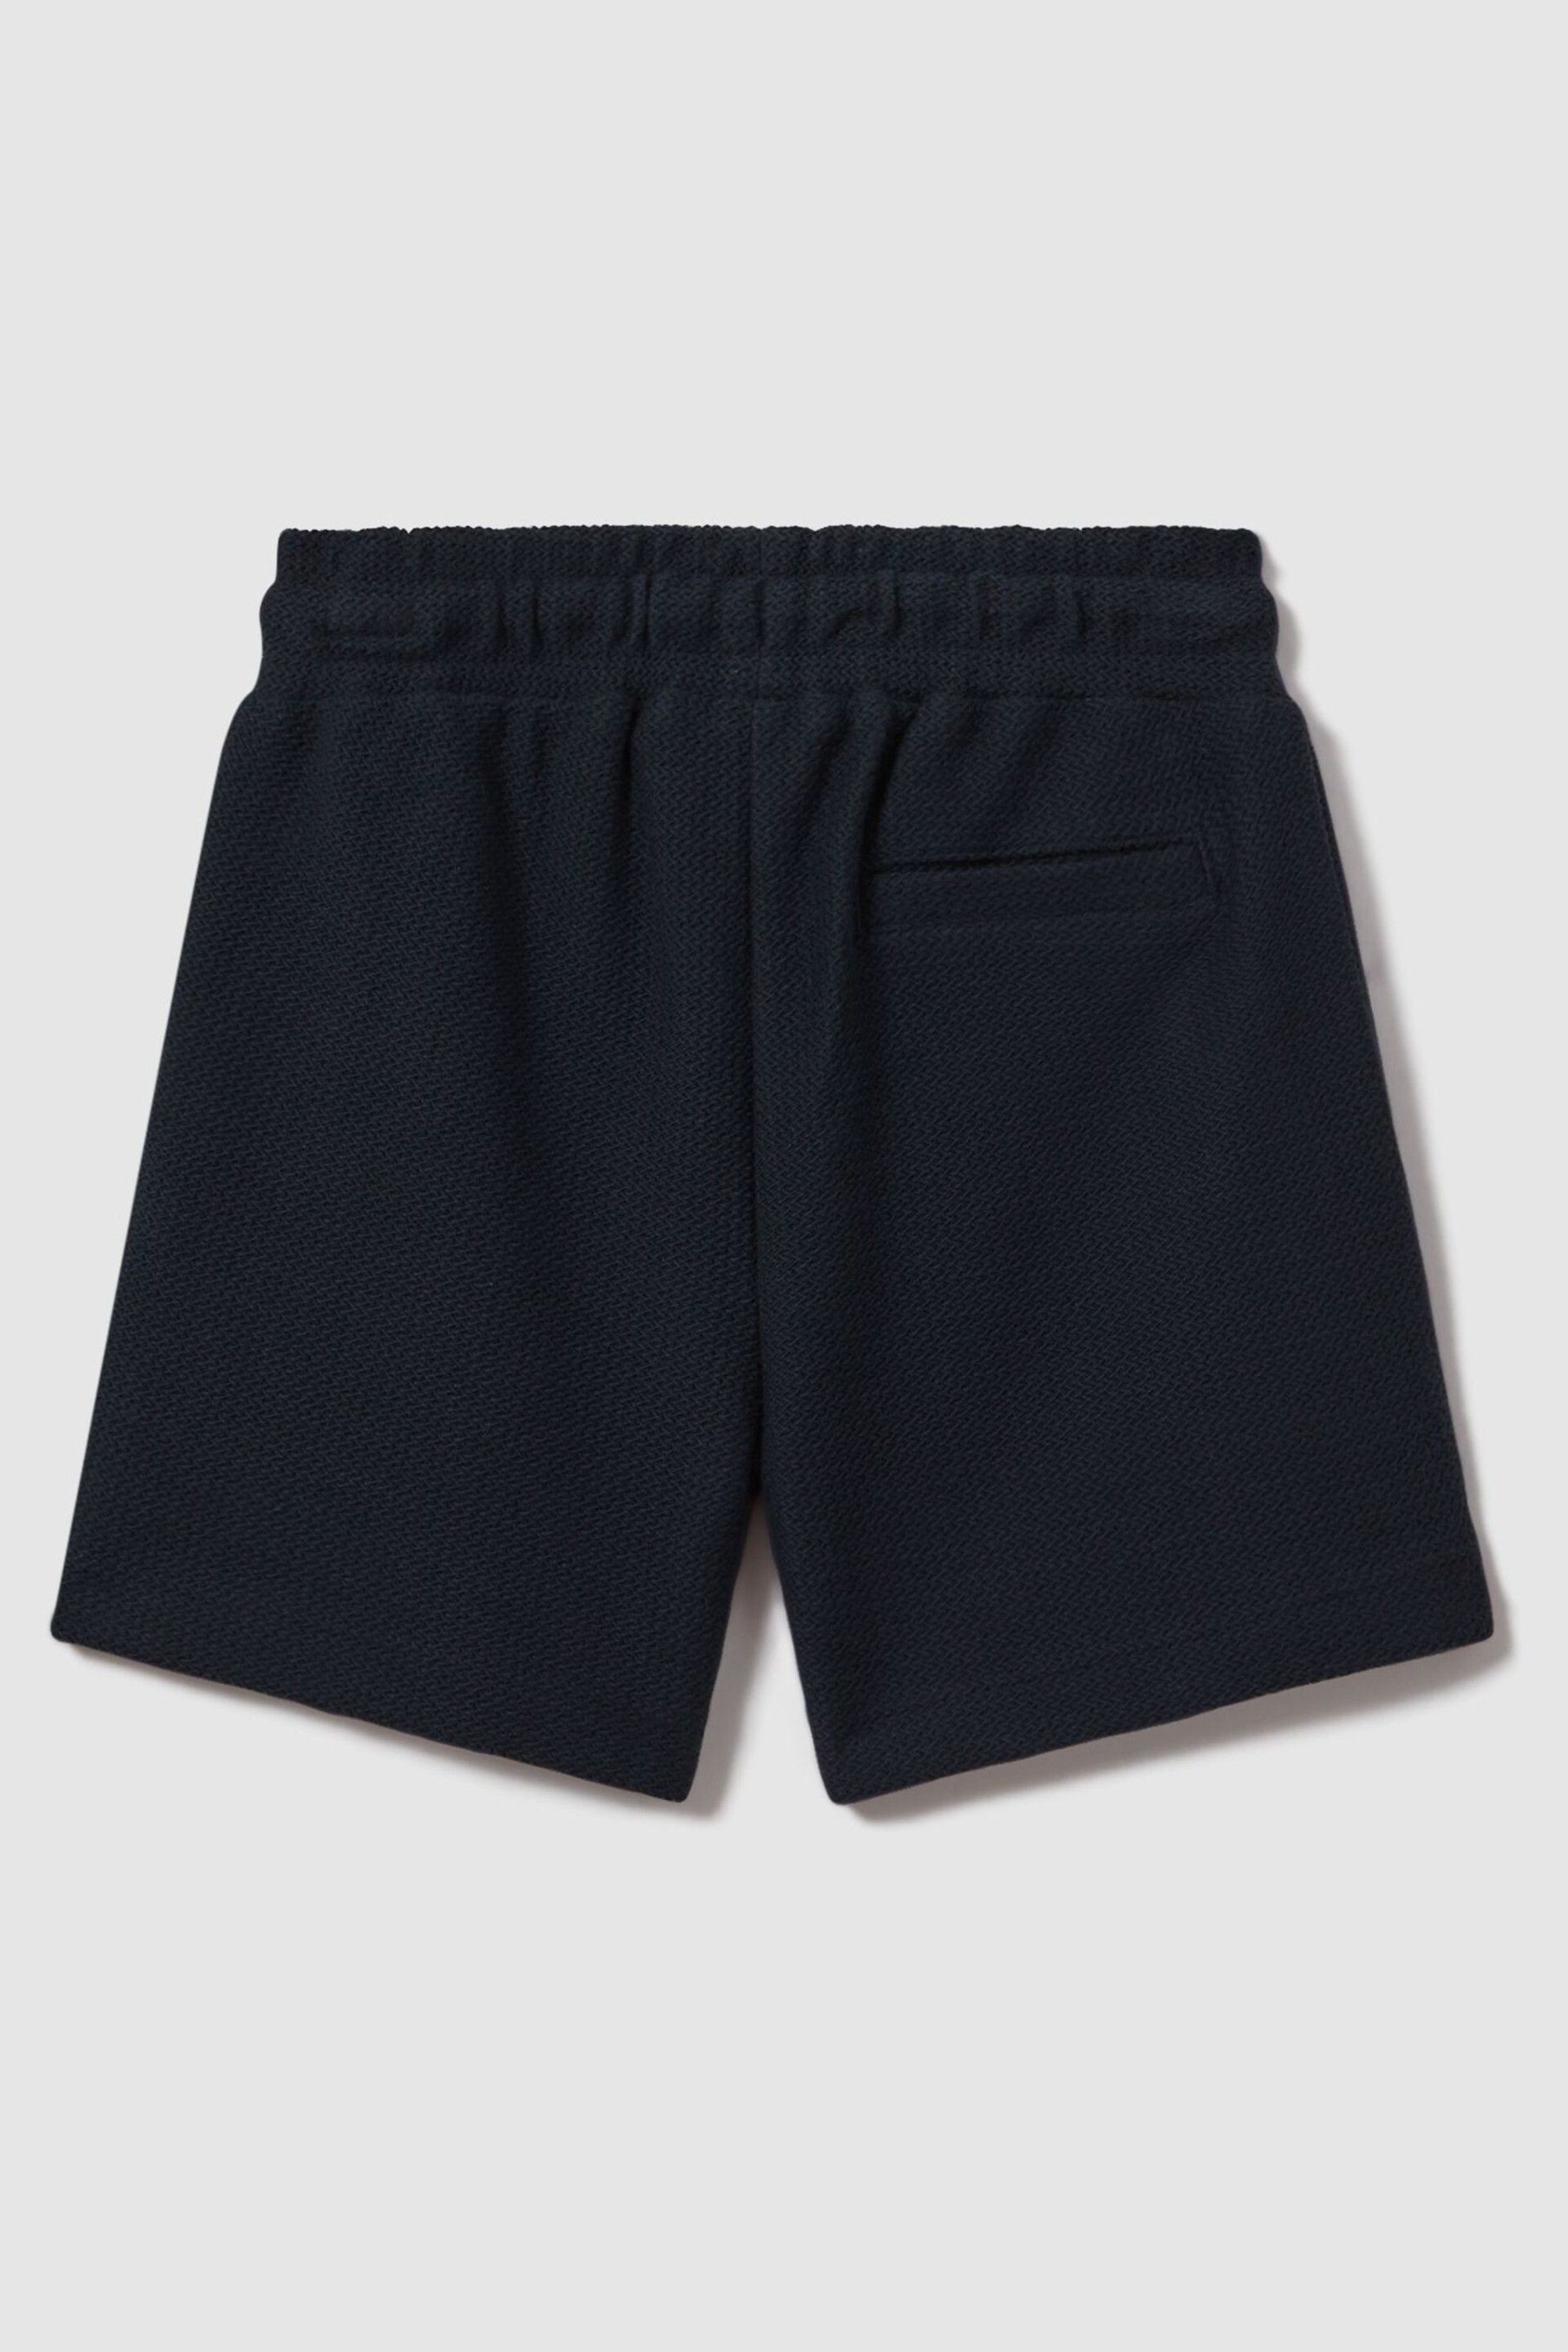 Reiss Navy Hester Junior Textured Cotton Drawstring Shorts - Image 2 of 3